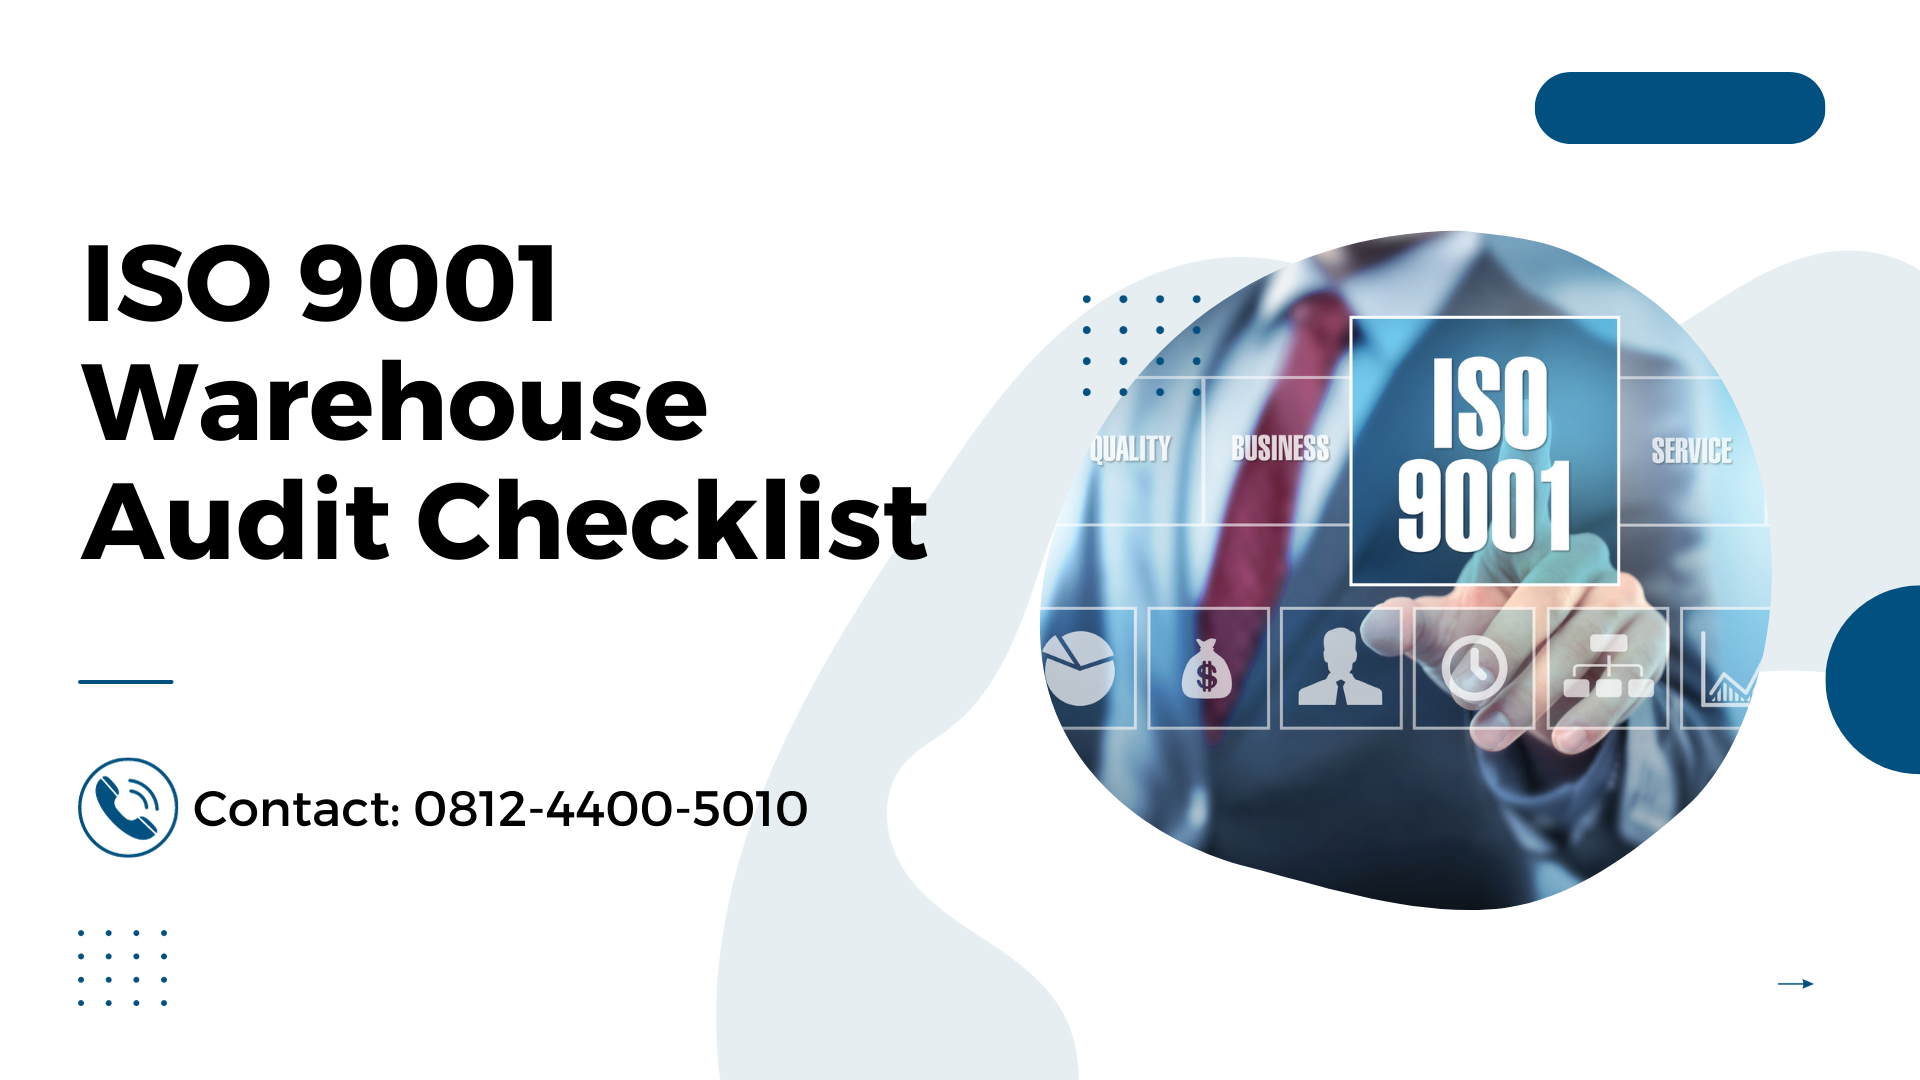 ISO 9001 Warehouse Audit Checklist